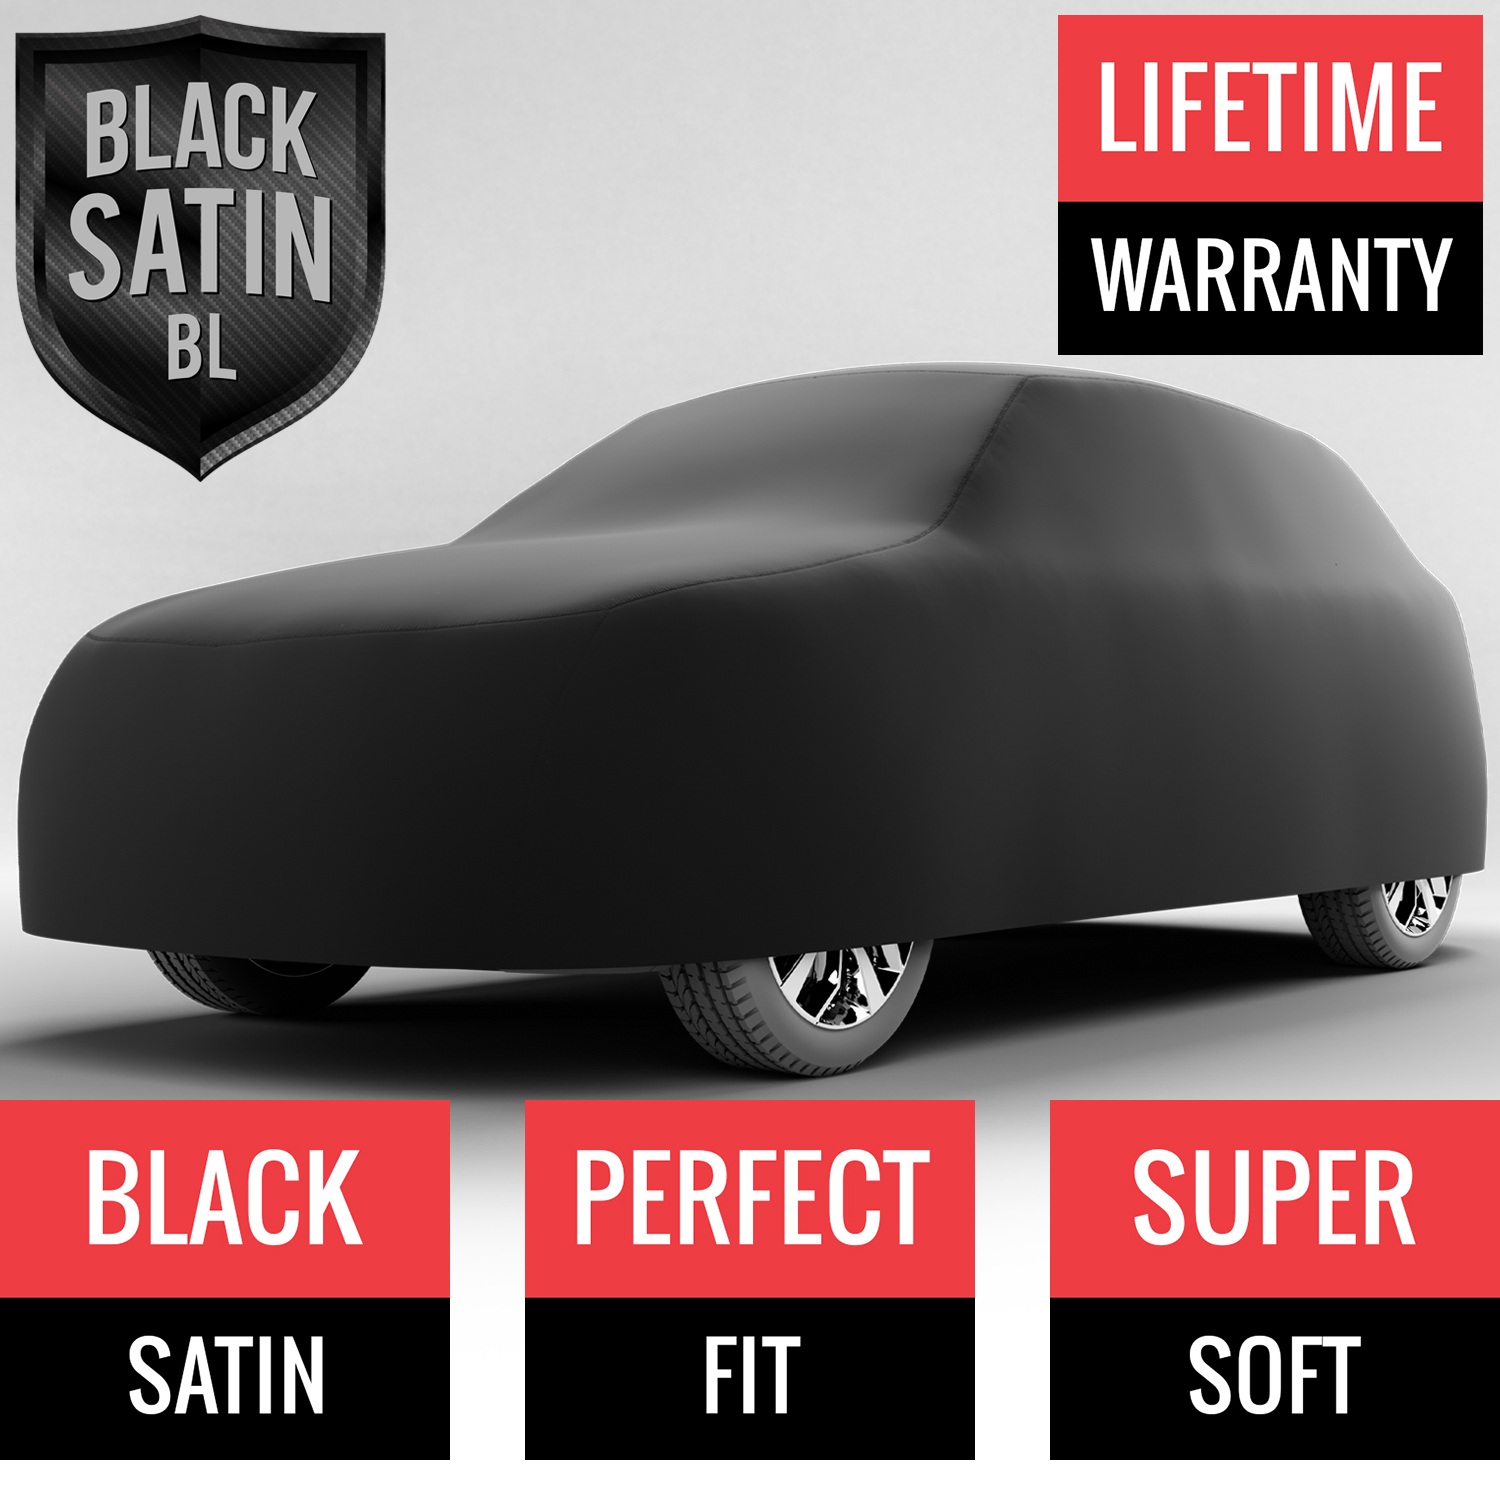 Black Satin BL - Black Car Cover for Scion xB 2012 Wagon 4-Door